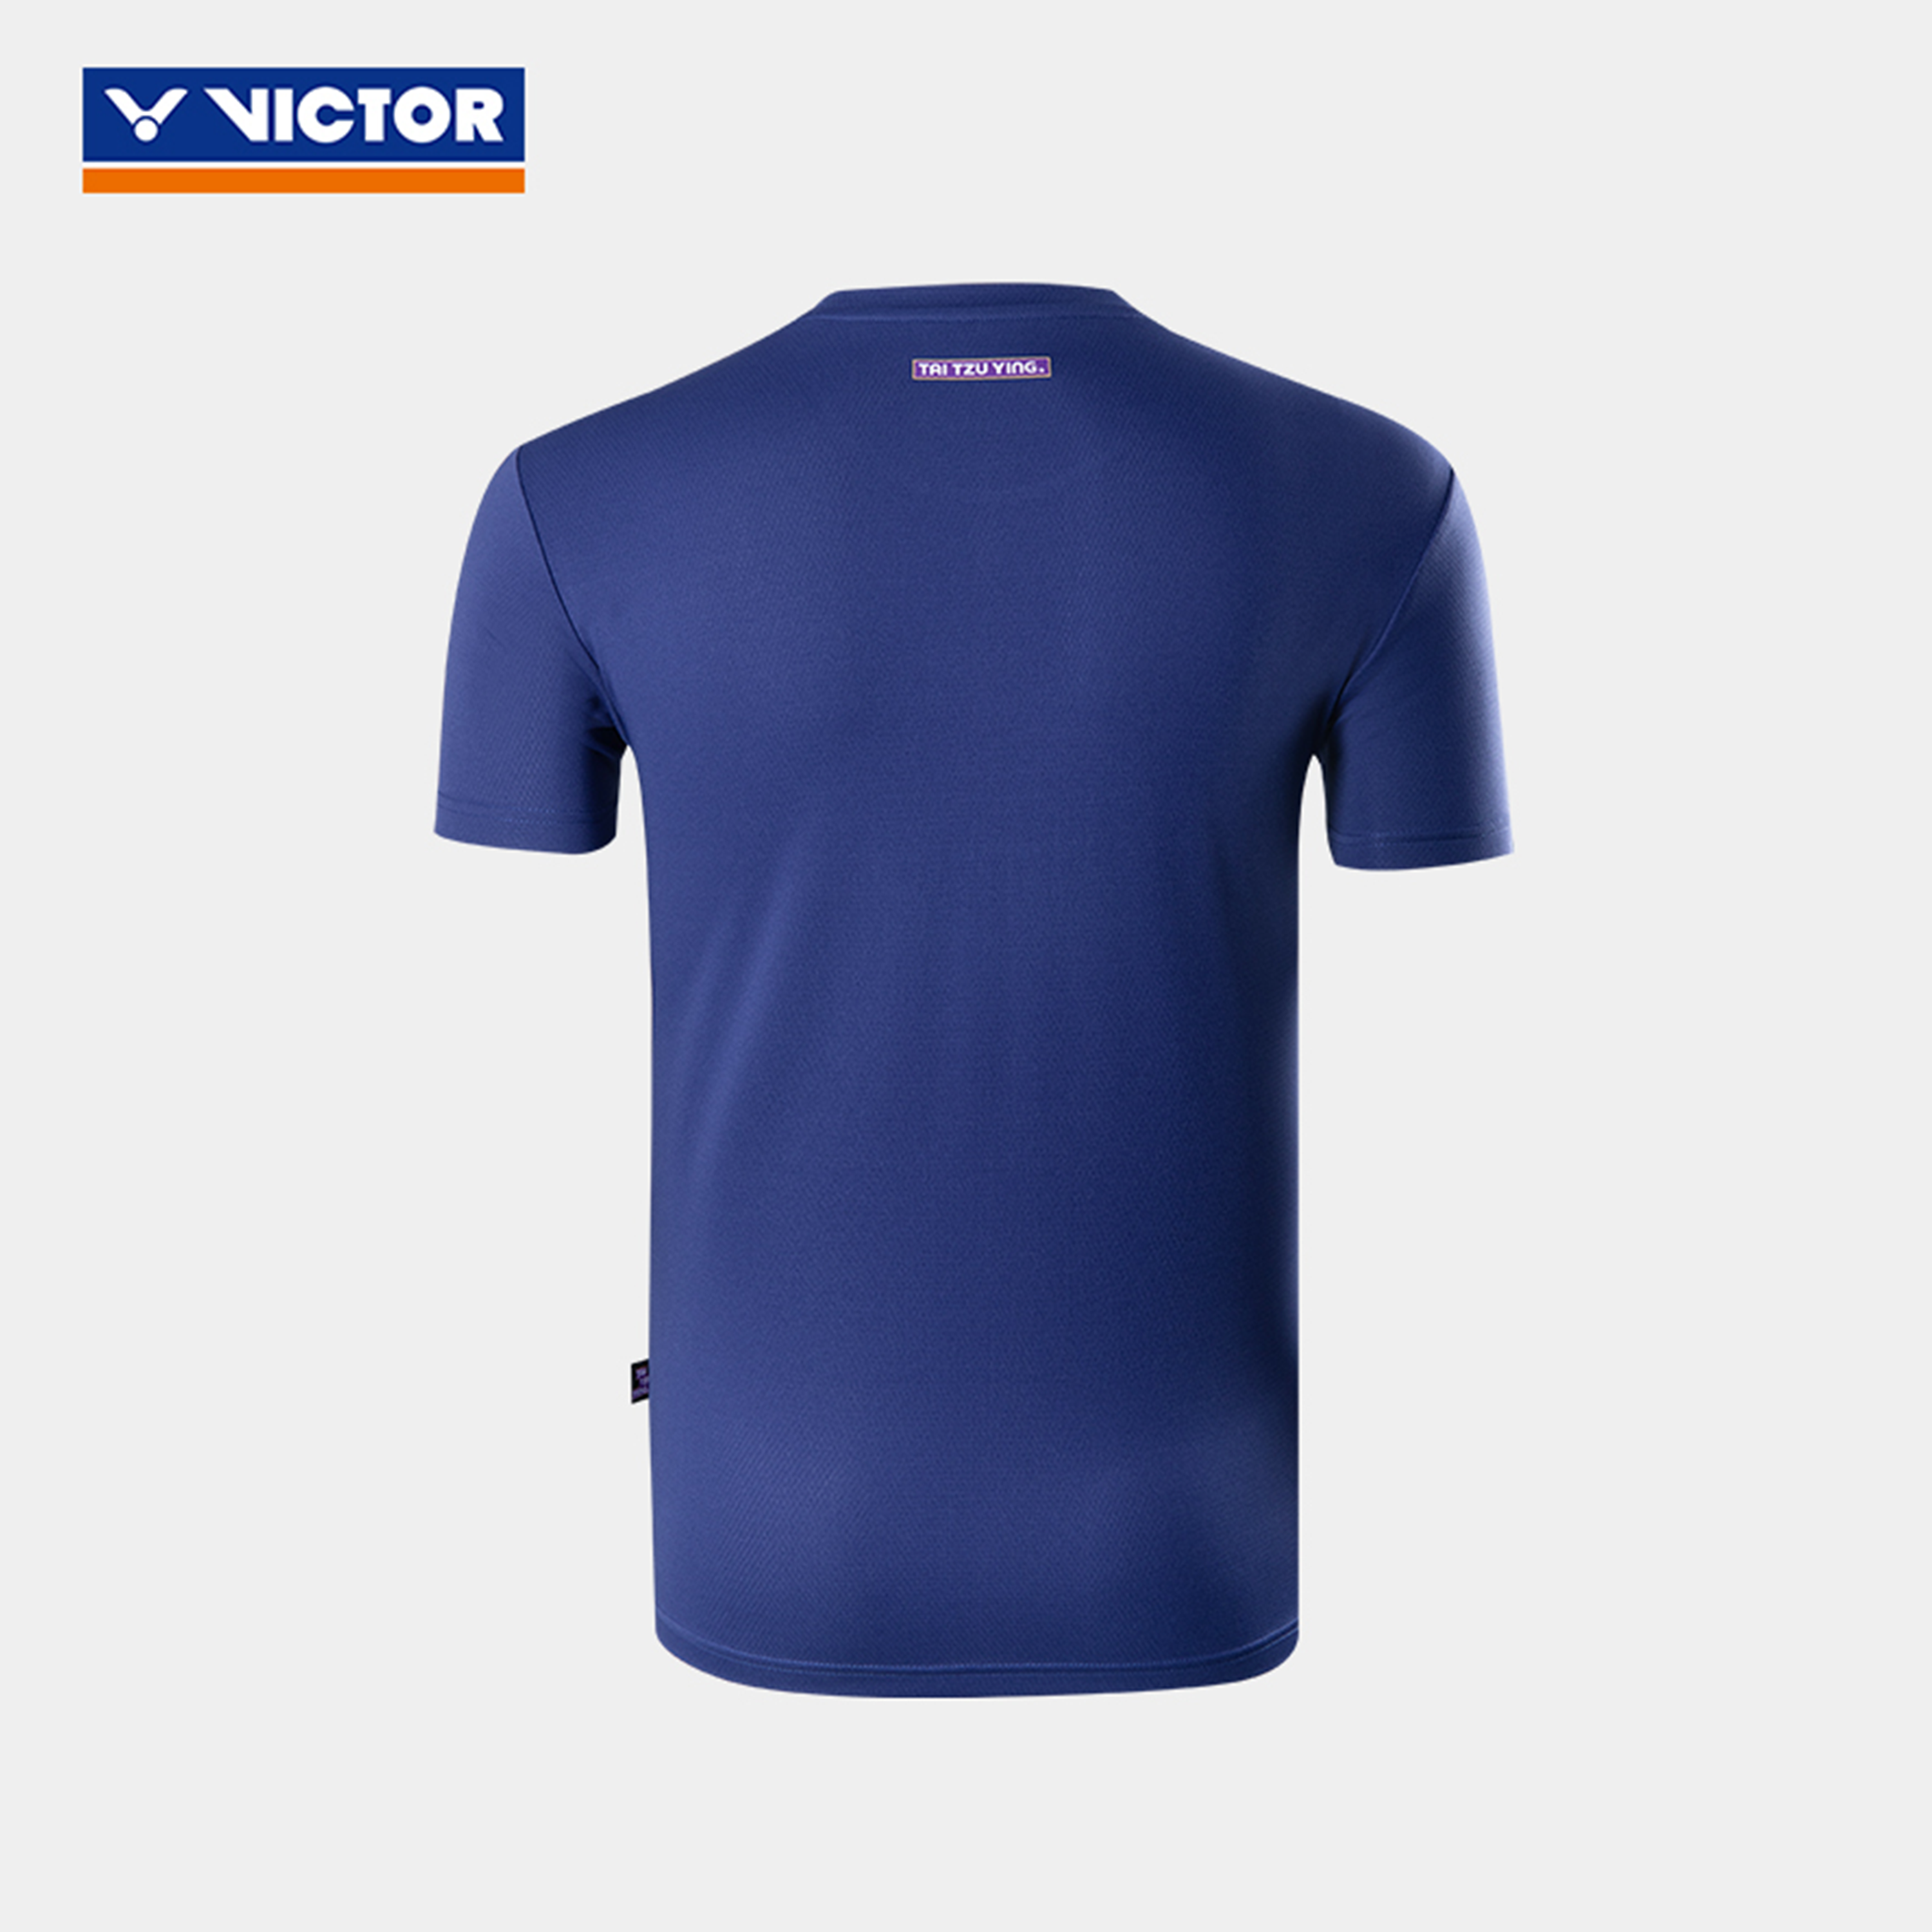 Victor X TTY T-35005B Sports Shirt Blue UNISEX